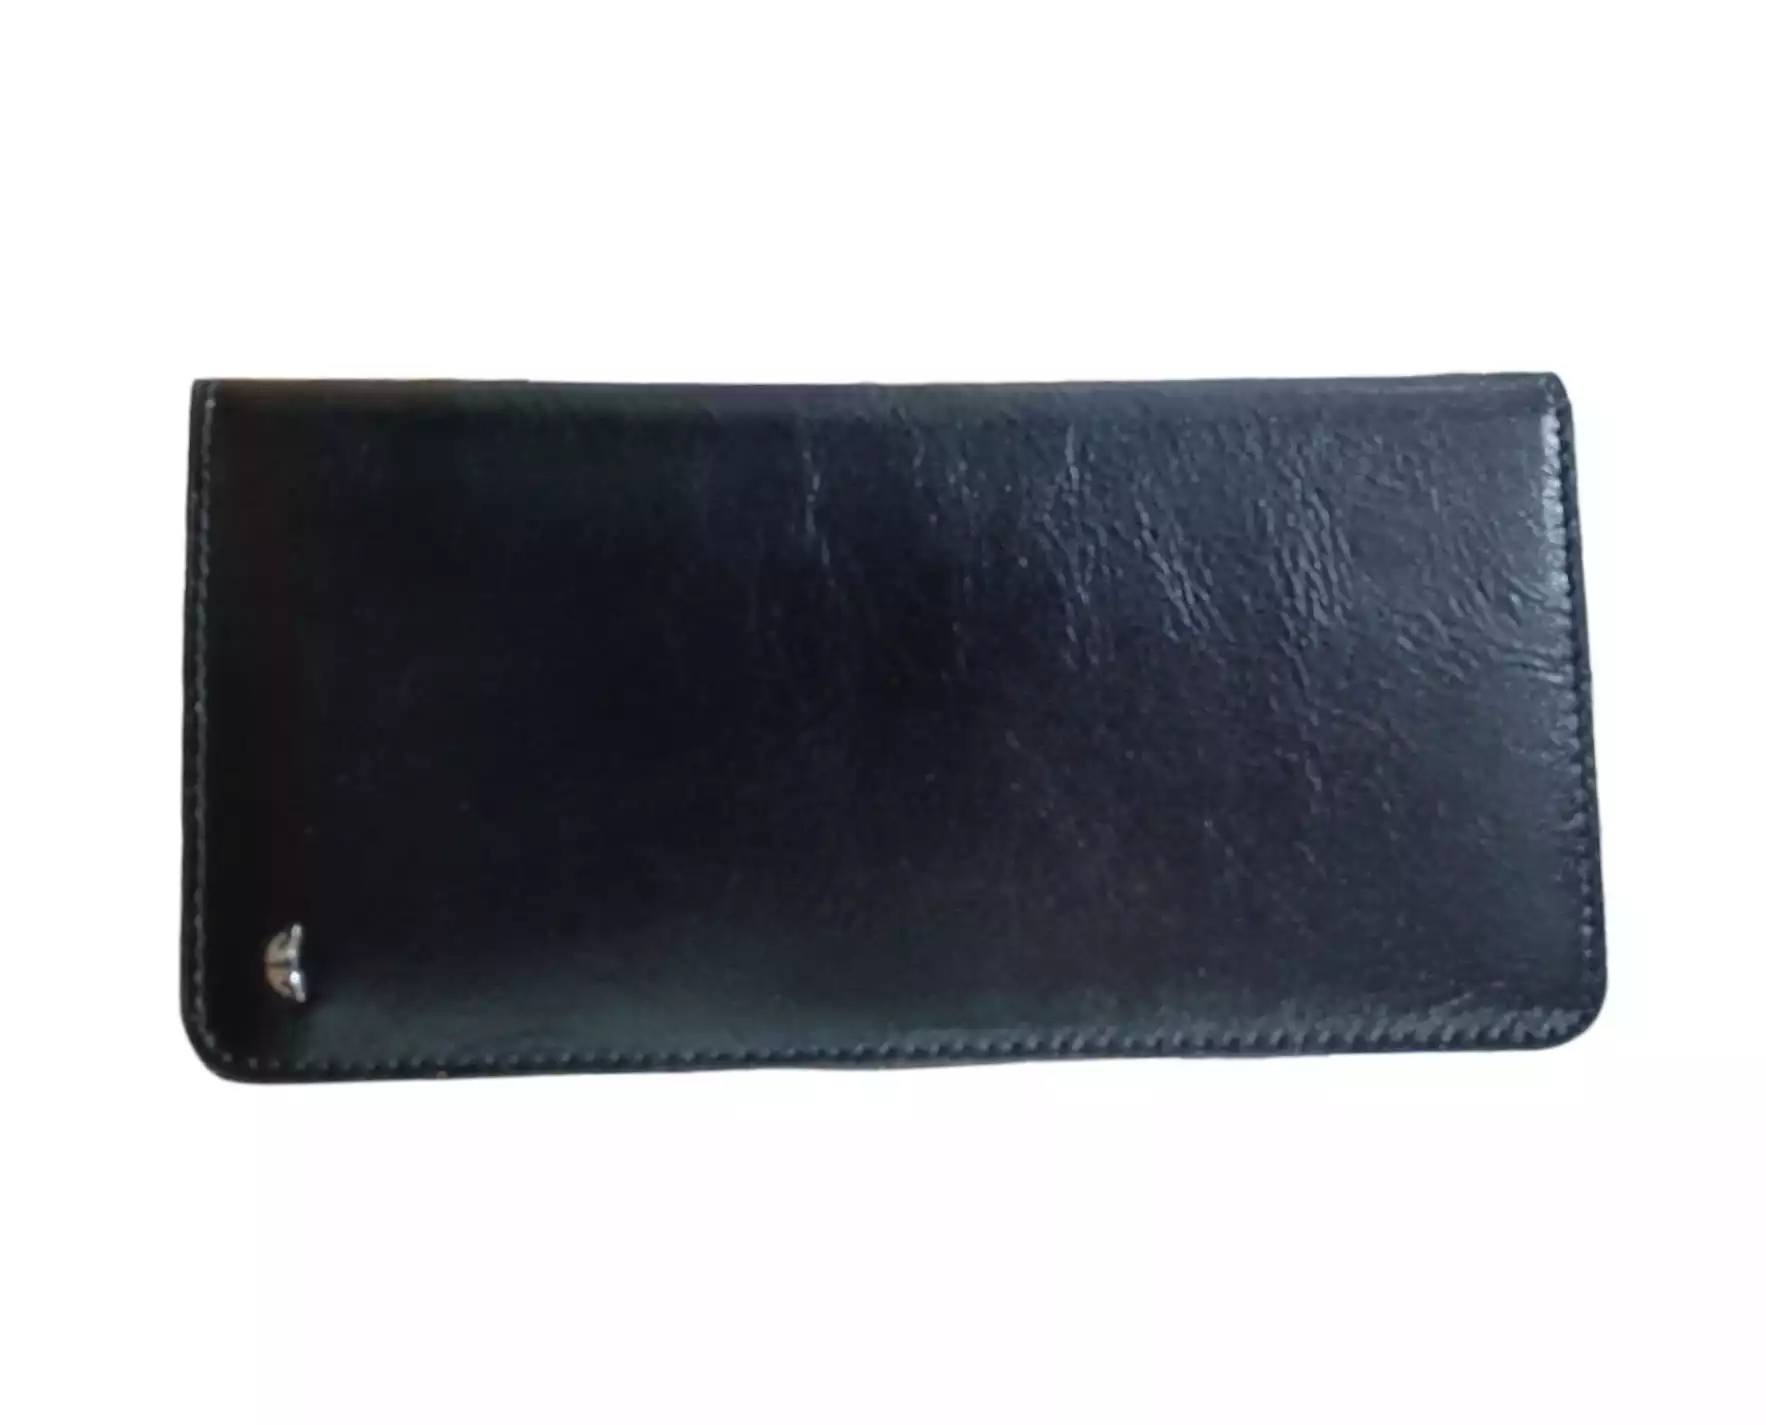 Wallet by Terdan